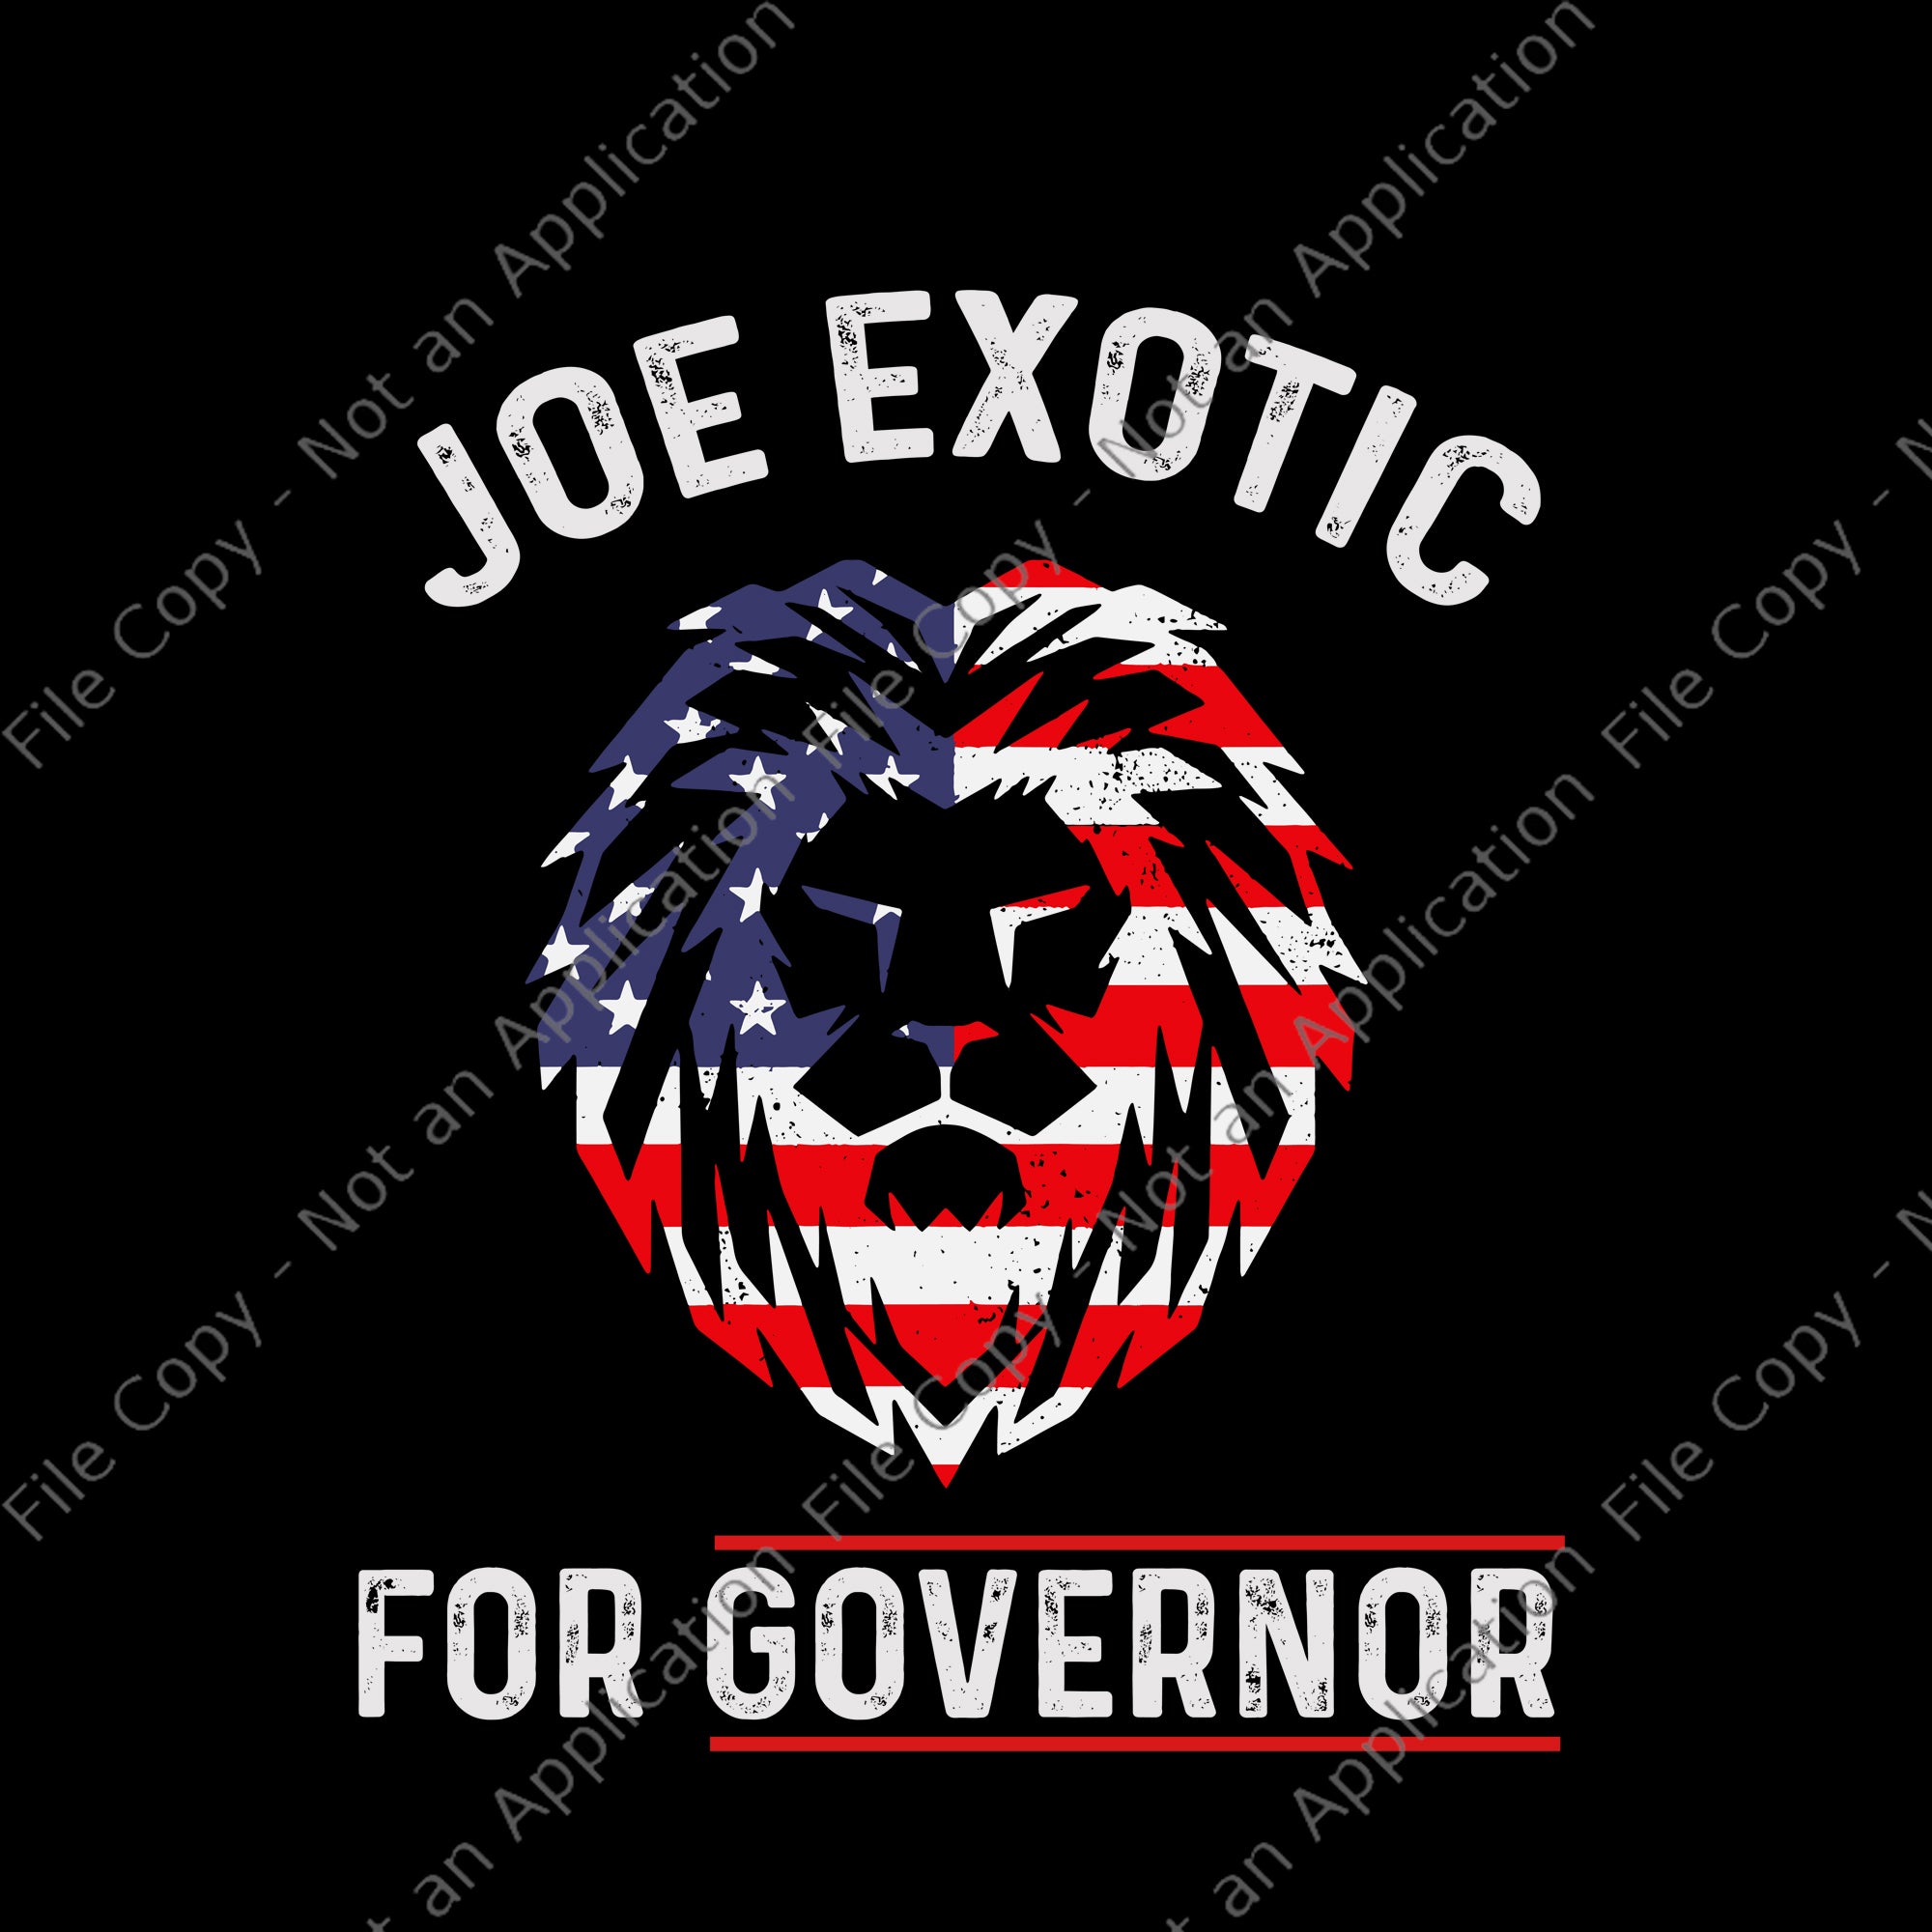 Joe exotic for governor flag svg, joe exotic for governor flag, joe exotic for governor premium png, joe exotic svg, png, eps, dxf file